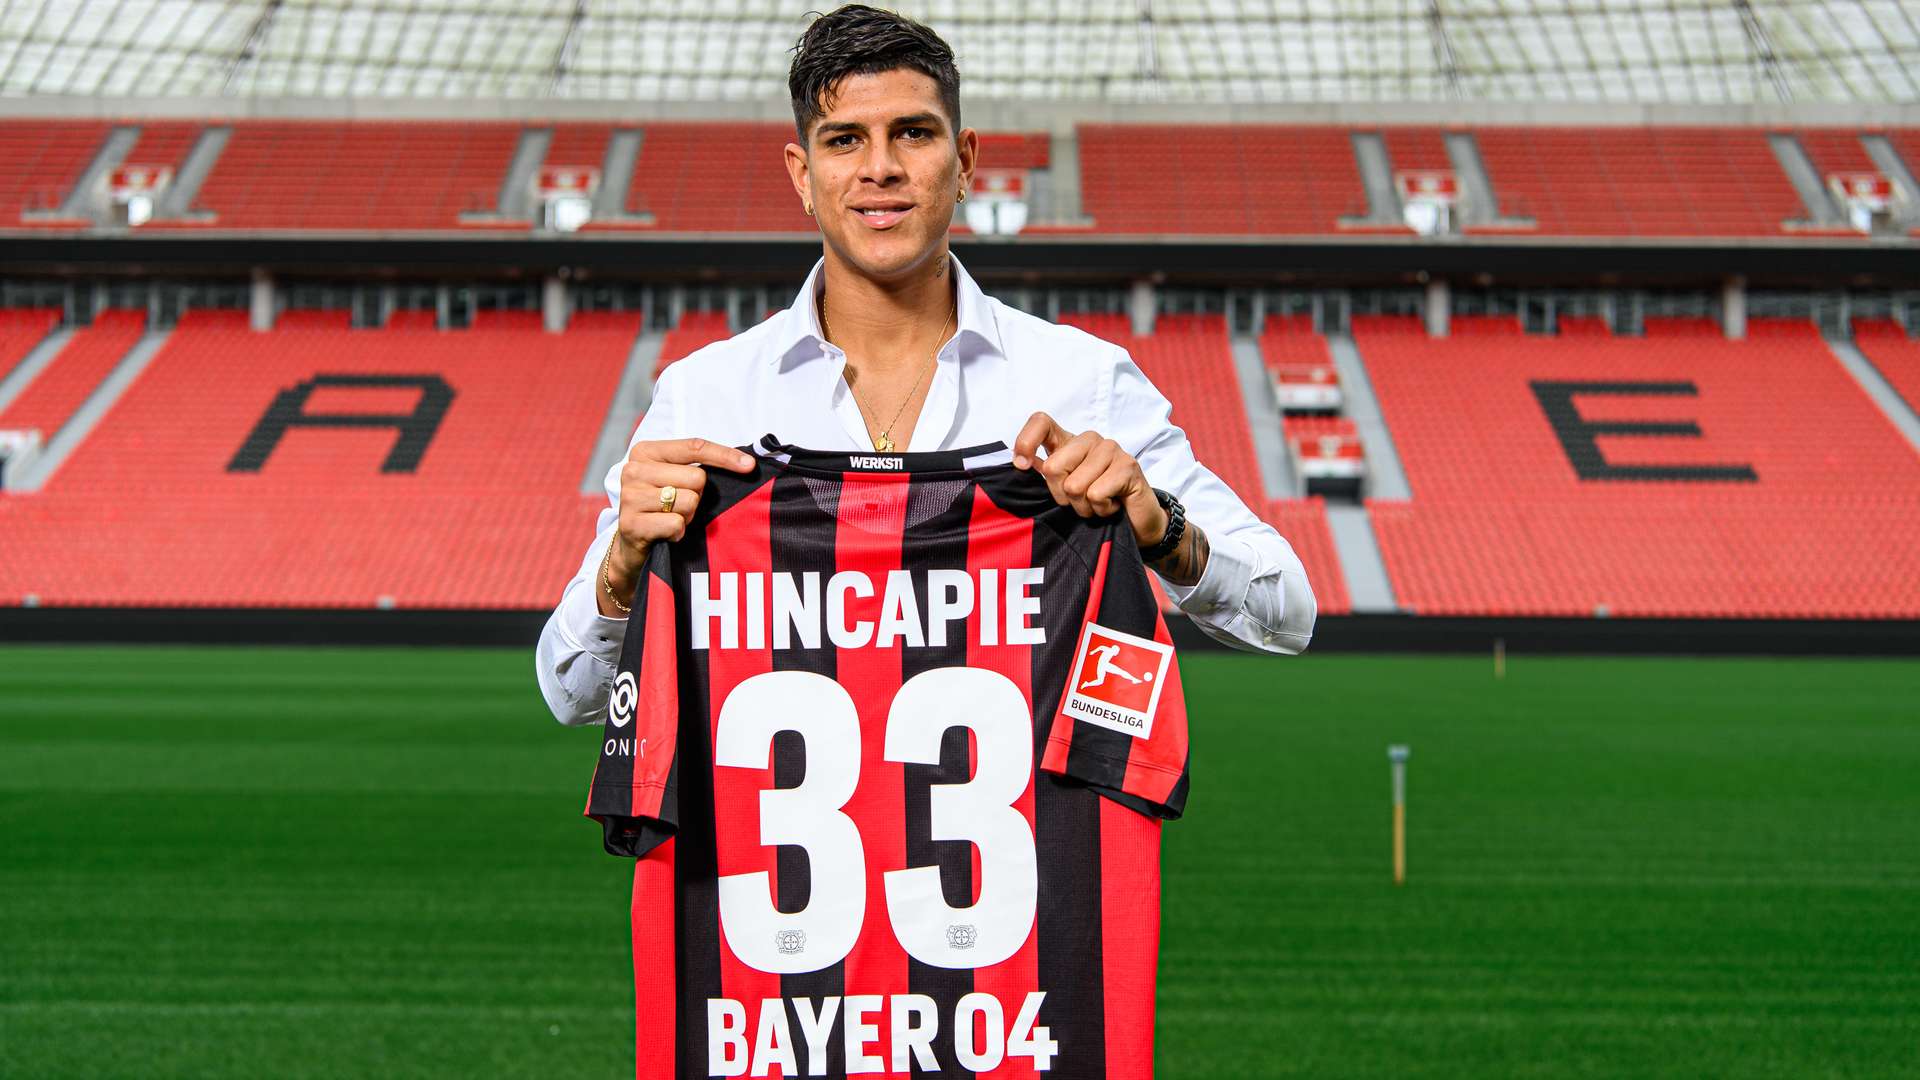 Bayer 04 sign central defender Hincapie | Bayer04.de